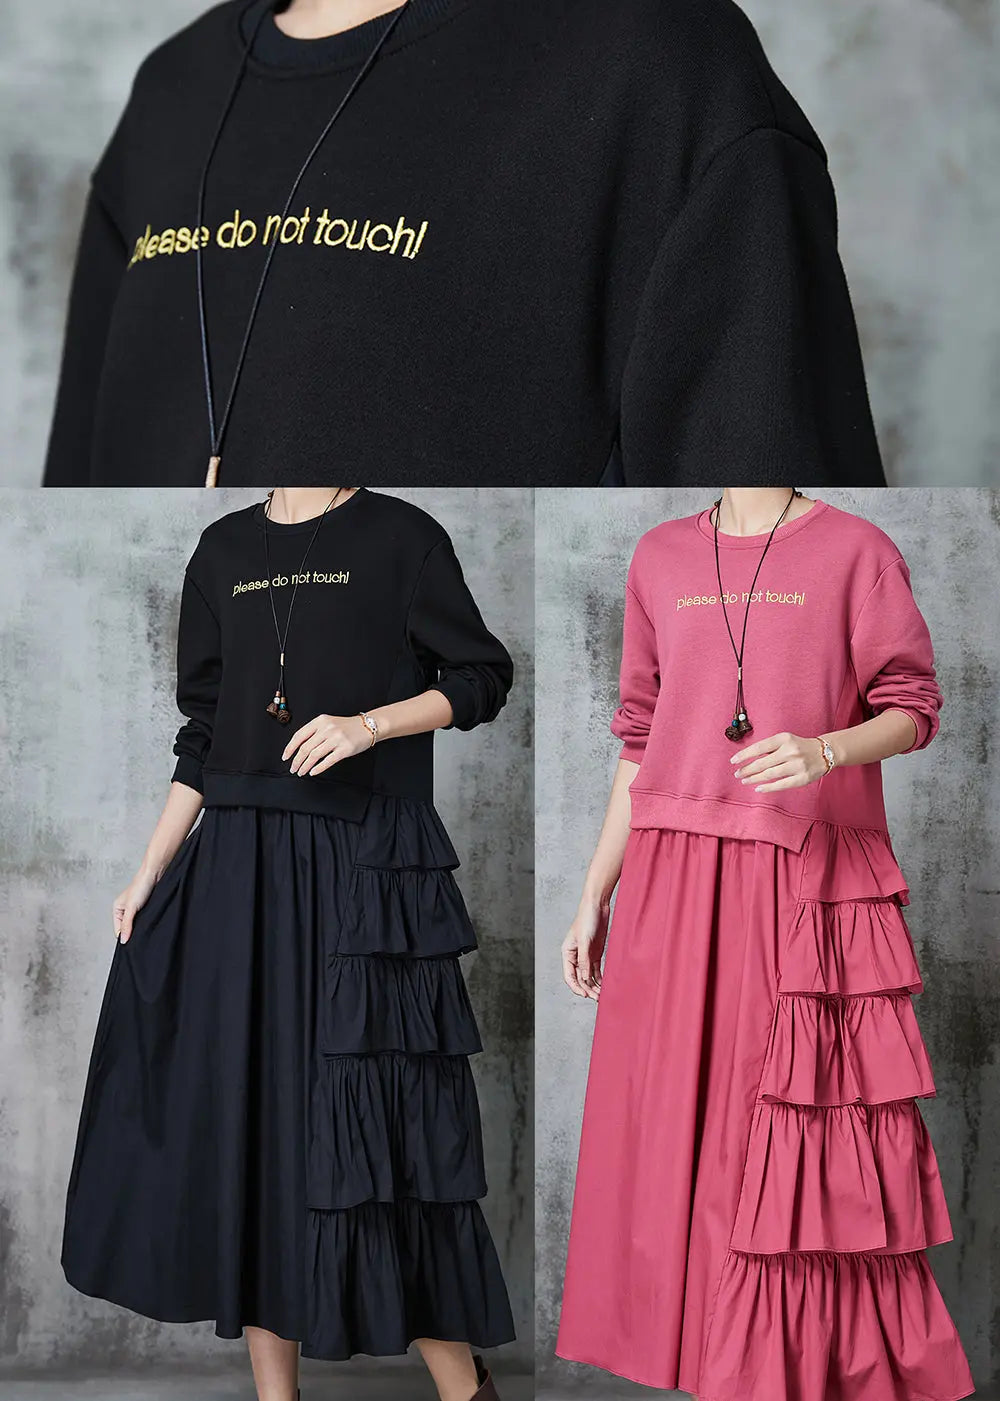 Black Patchwork Cotton Sweatshirt Dress Layered Ruffled Spring Ada Fashion